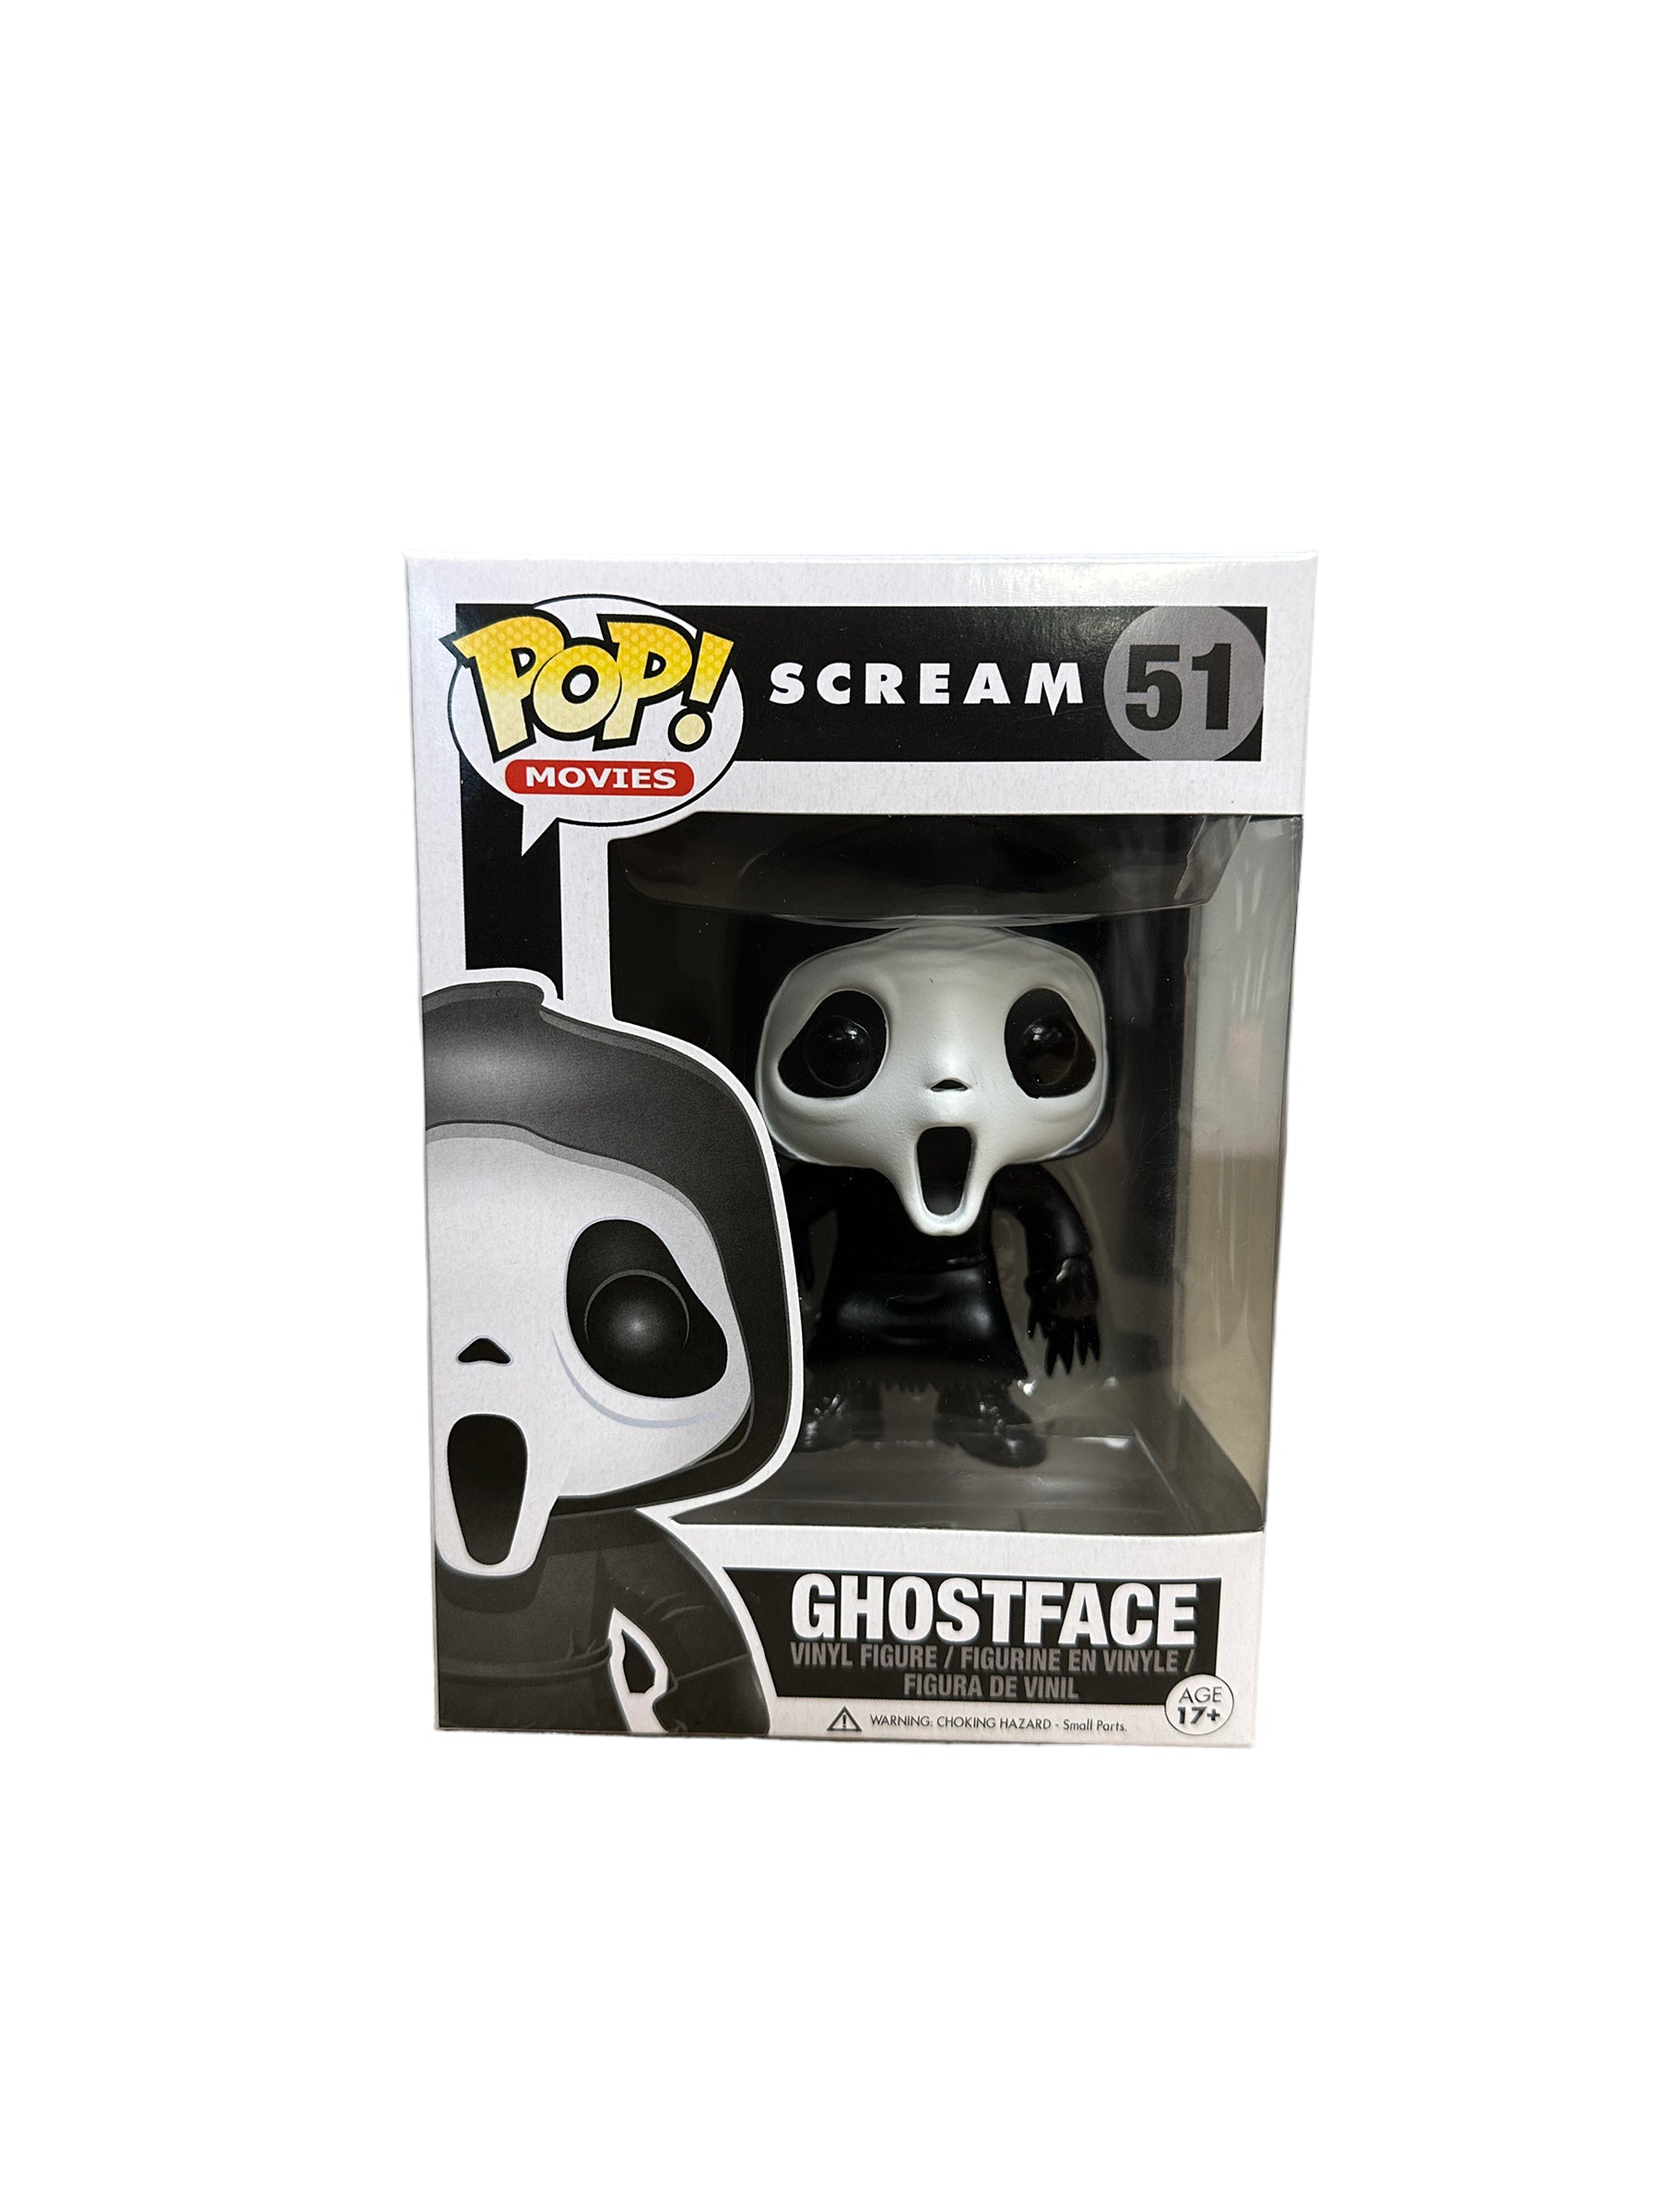 Ghostface #51 Funko Pop! - Scream - 2014 Pop! - Condition 8.75/10